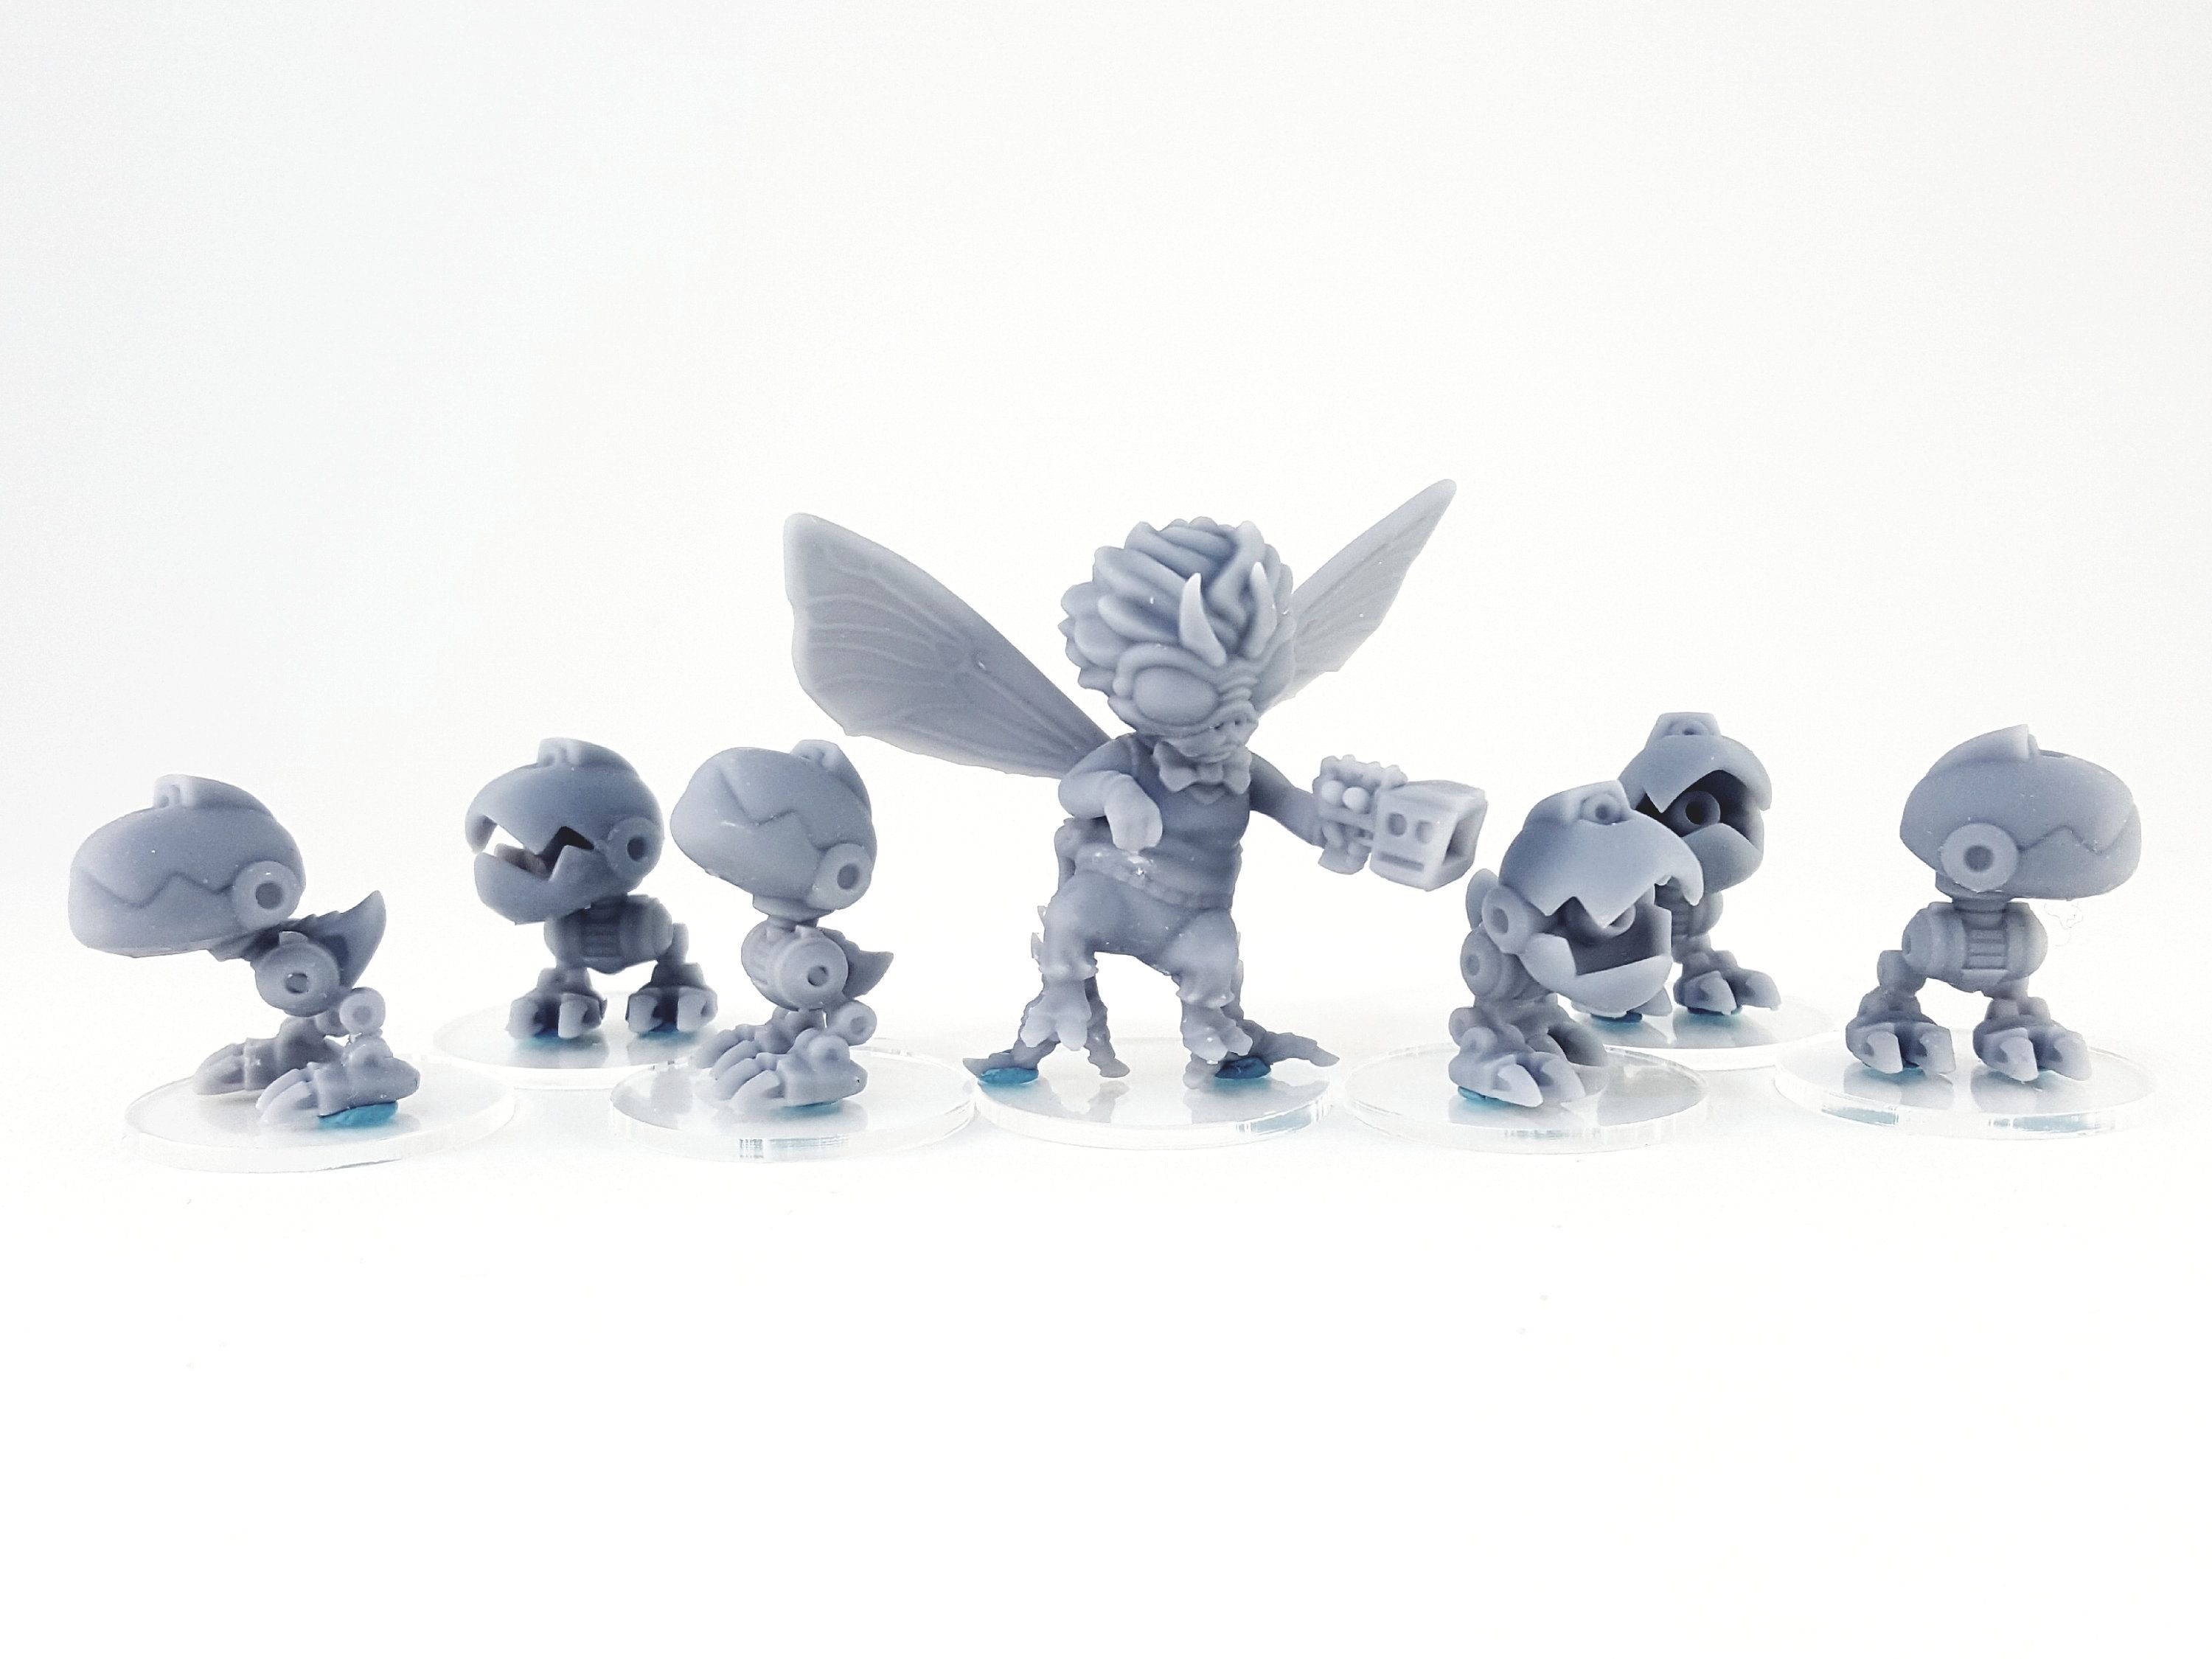 Chibi Baxter Stockman Mutant Fly Set 3D Printed Miniatures. Etsy. Baxter stockman, Chibi, Resin art